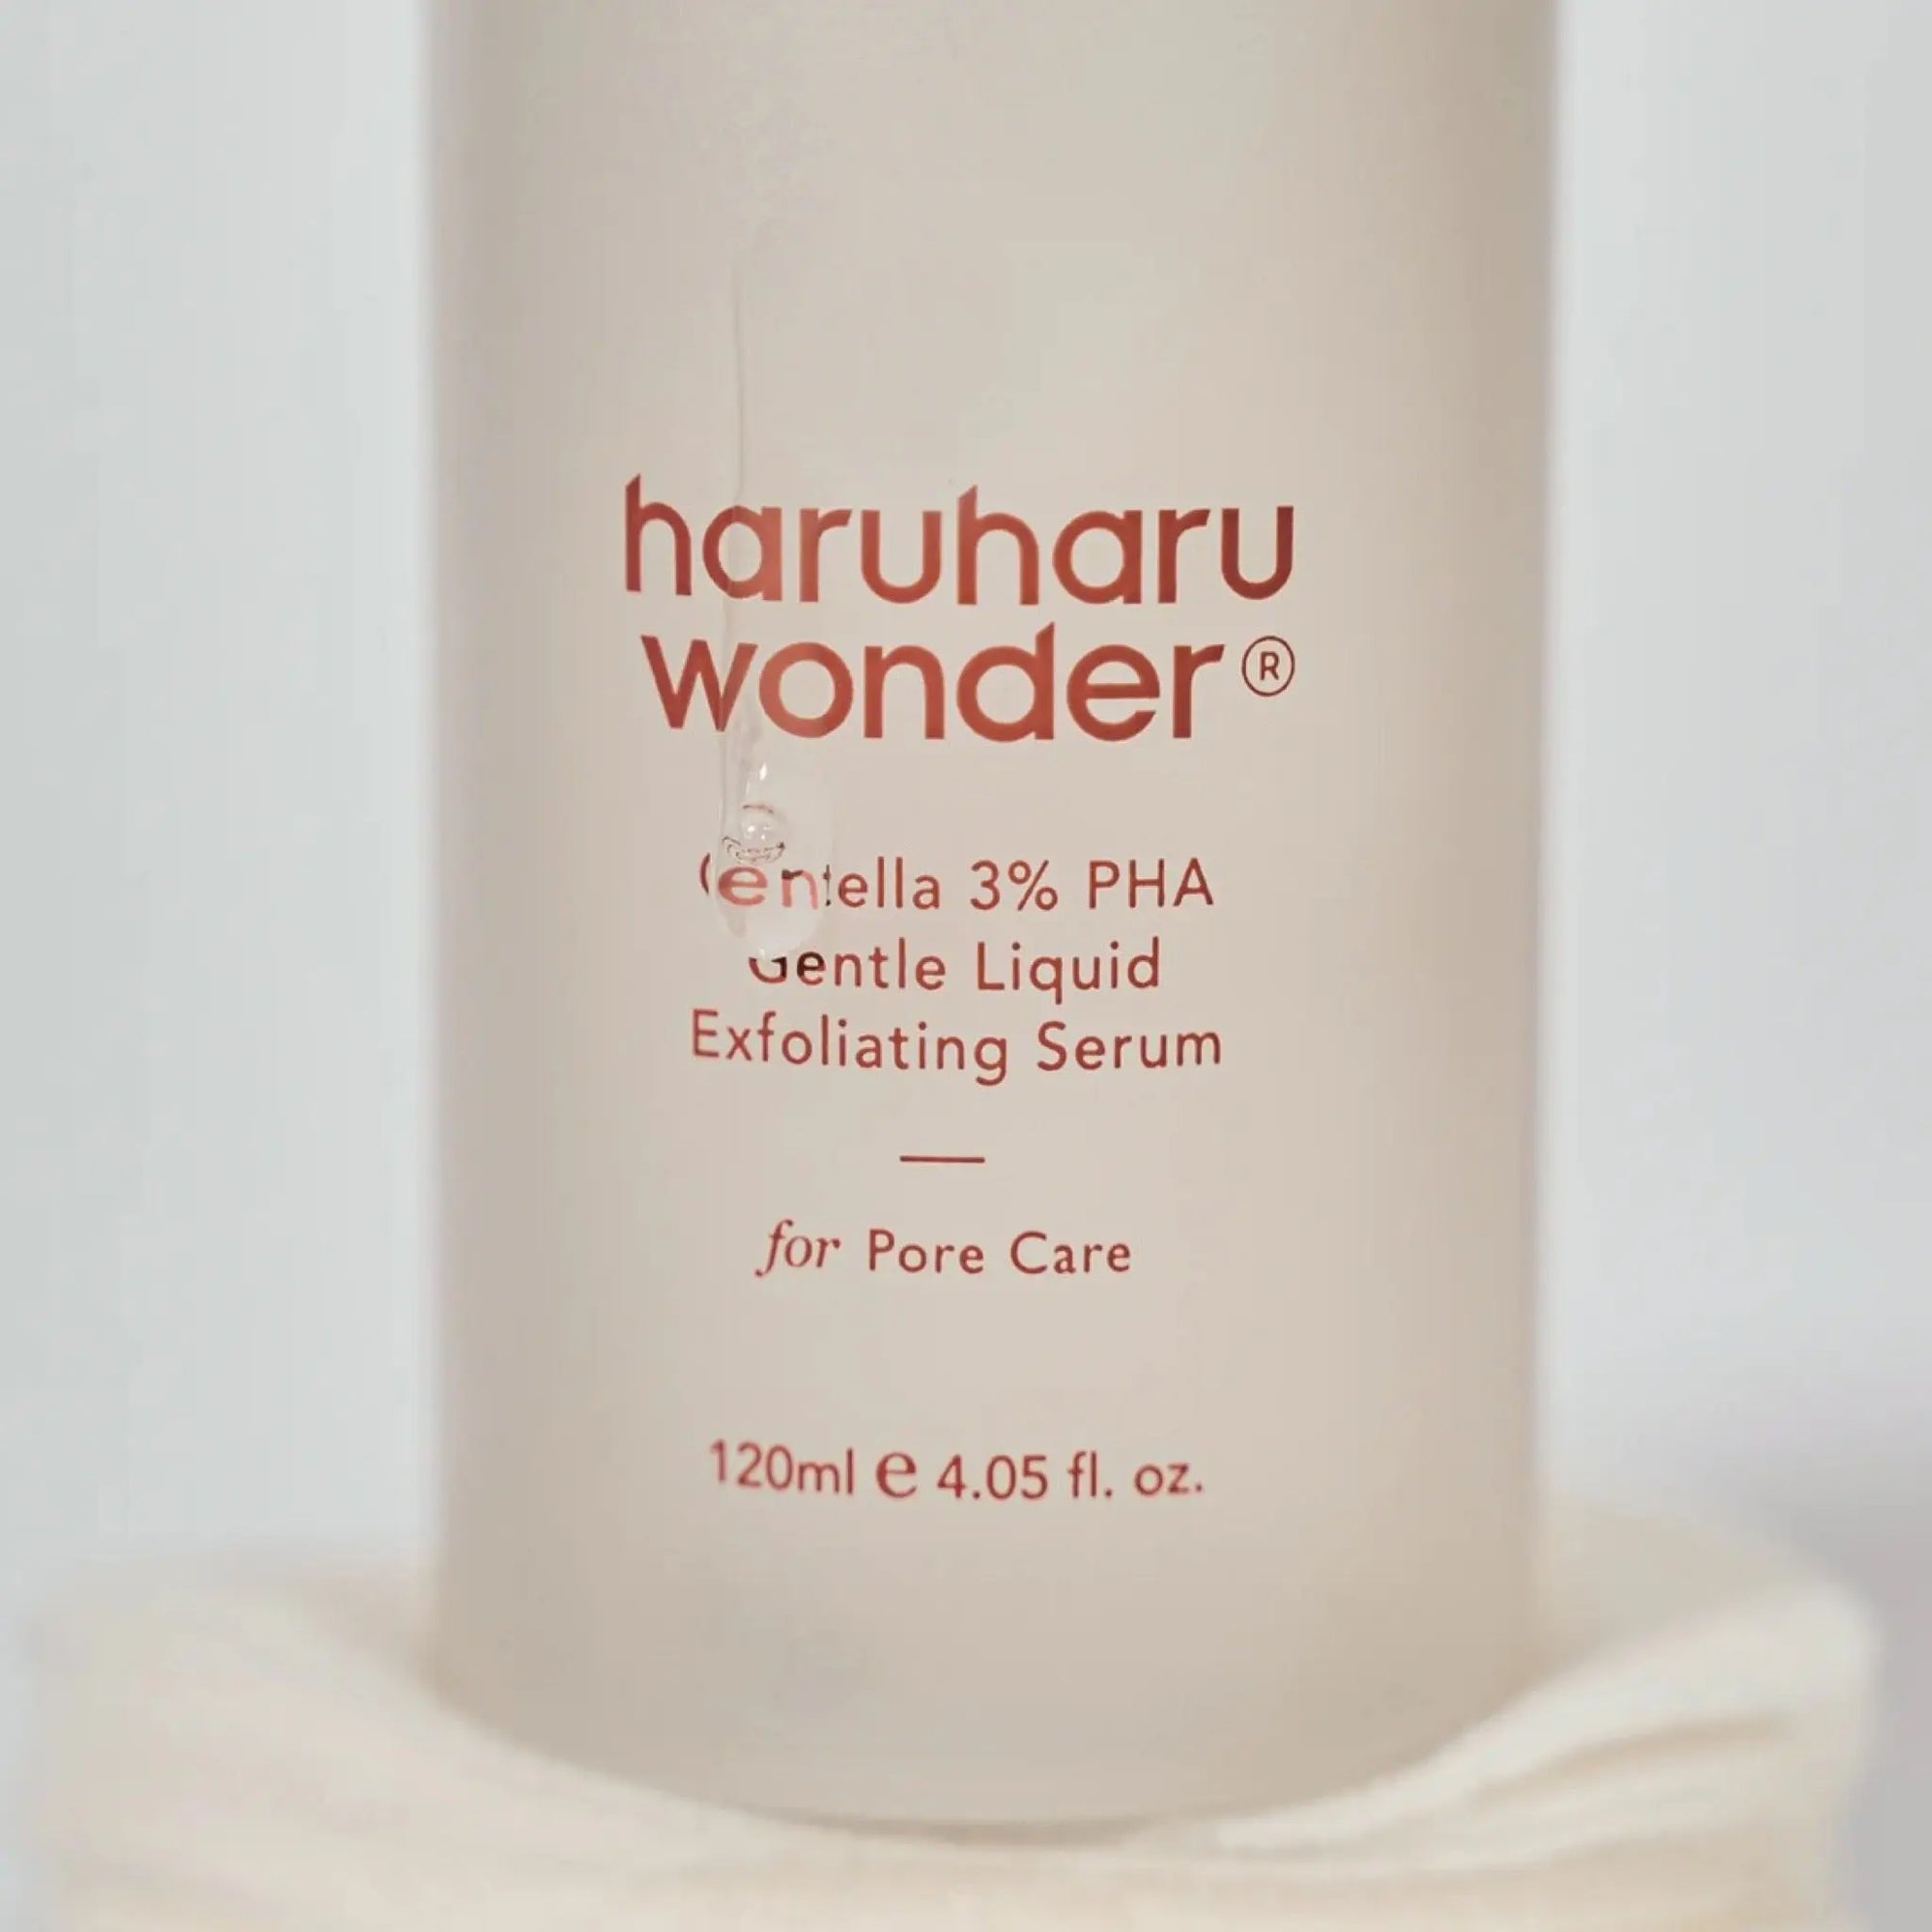 Haruharu Wonder - Centella 3% PHA Gentle Liquid Exfoliating Serum 120mL Haruharu Wonder